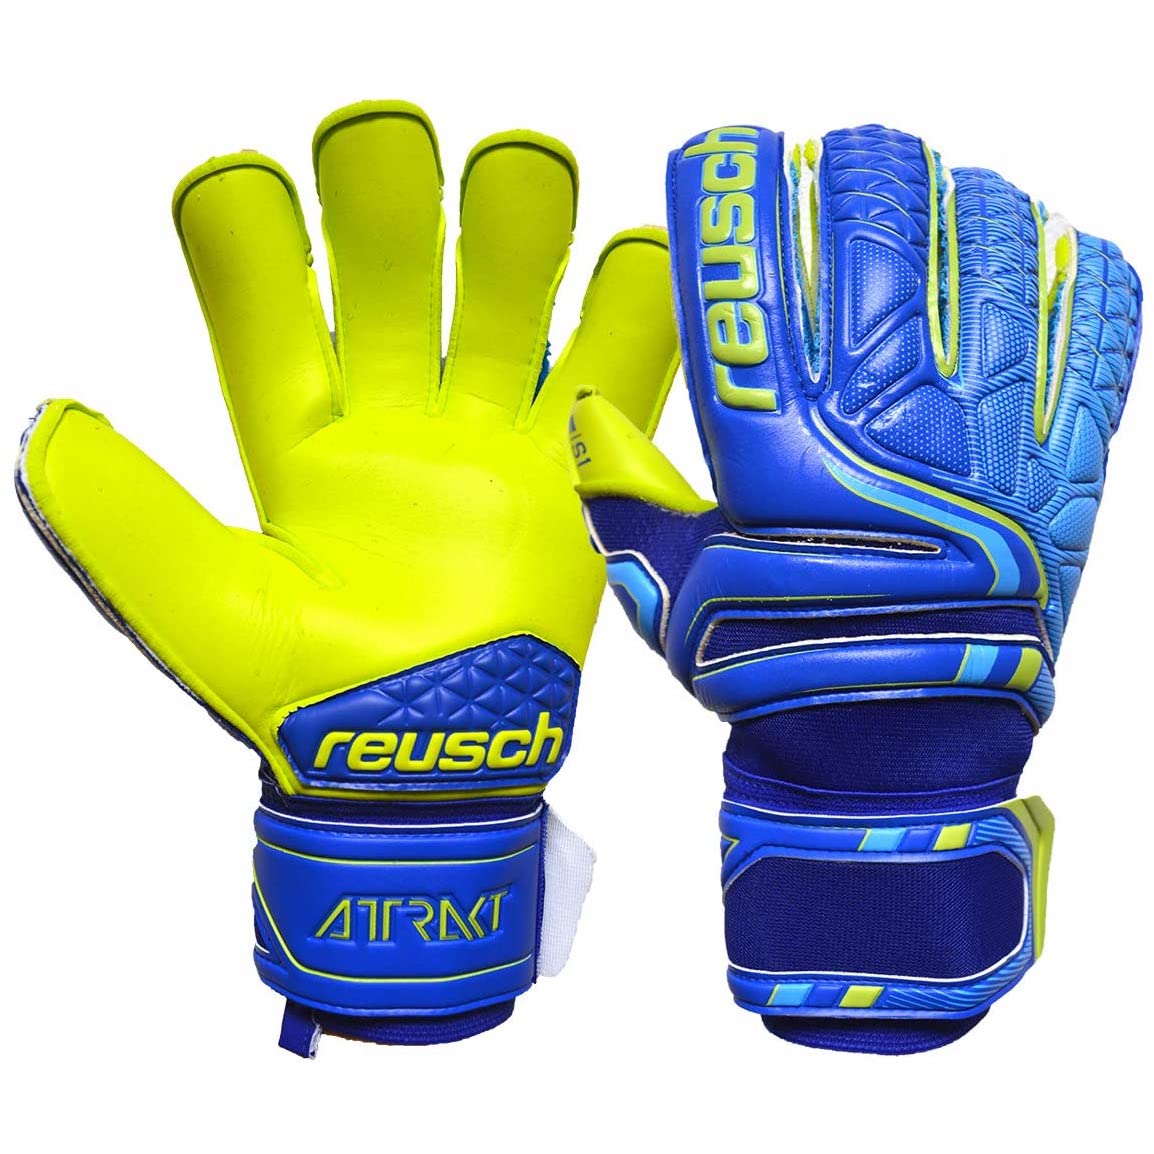 Reusch Attrakt S1 Evolution Finger Support Goalkeeper Gloves - Blue-Volt (Glove 2 - Inner/Outer)